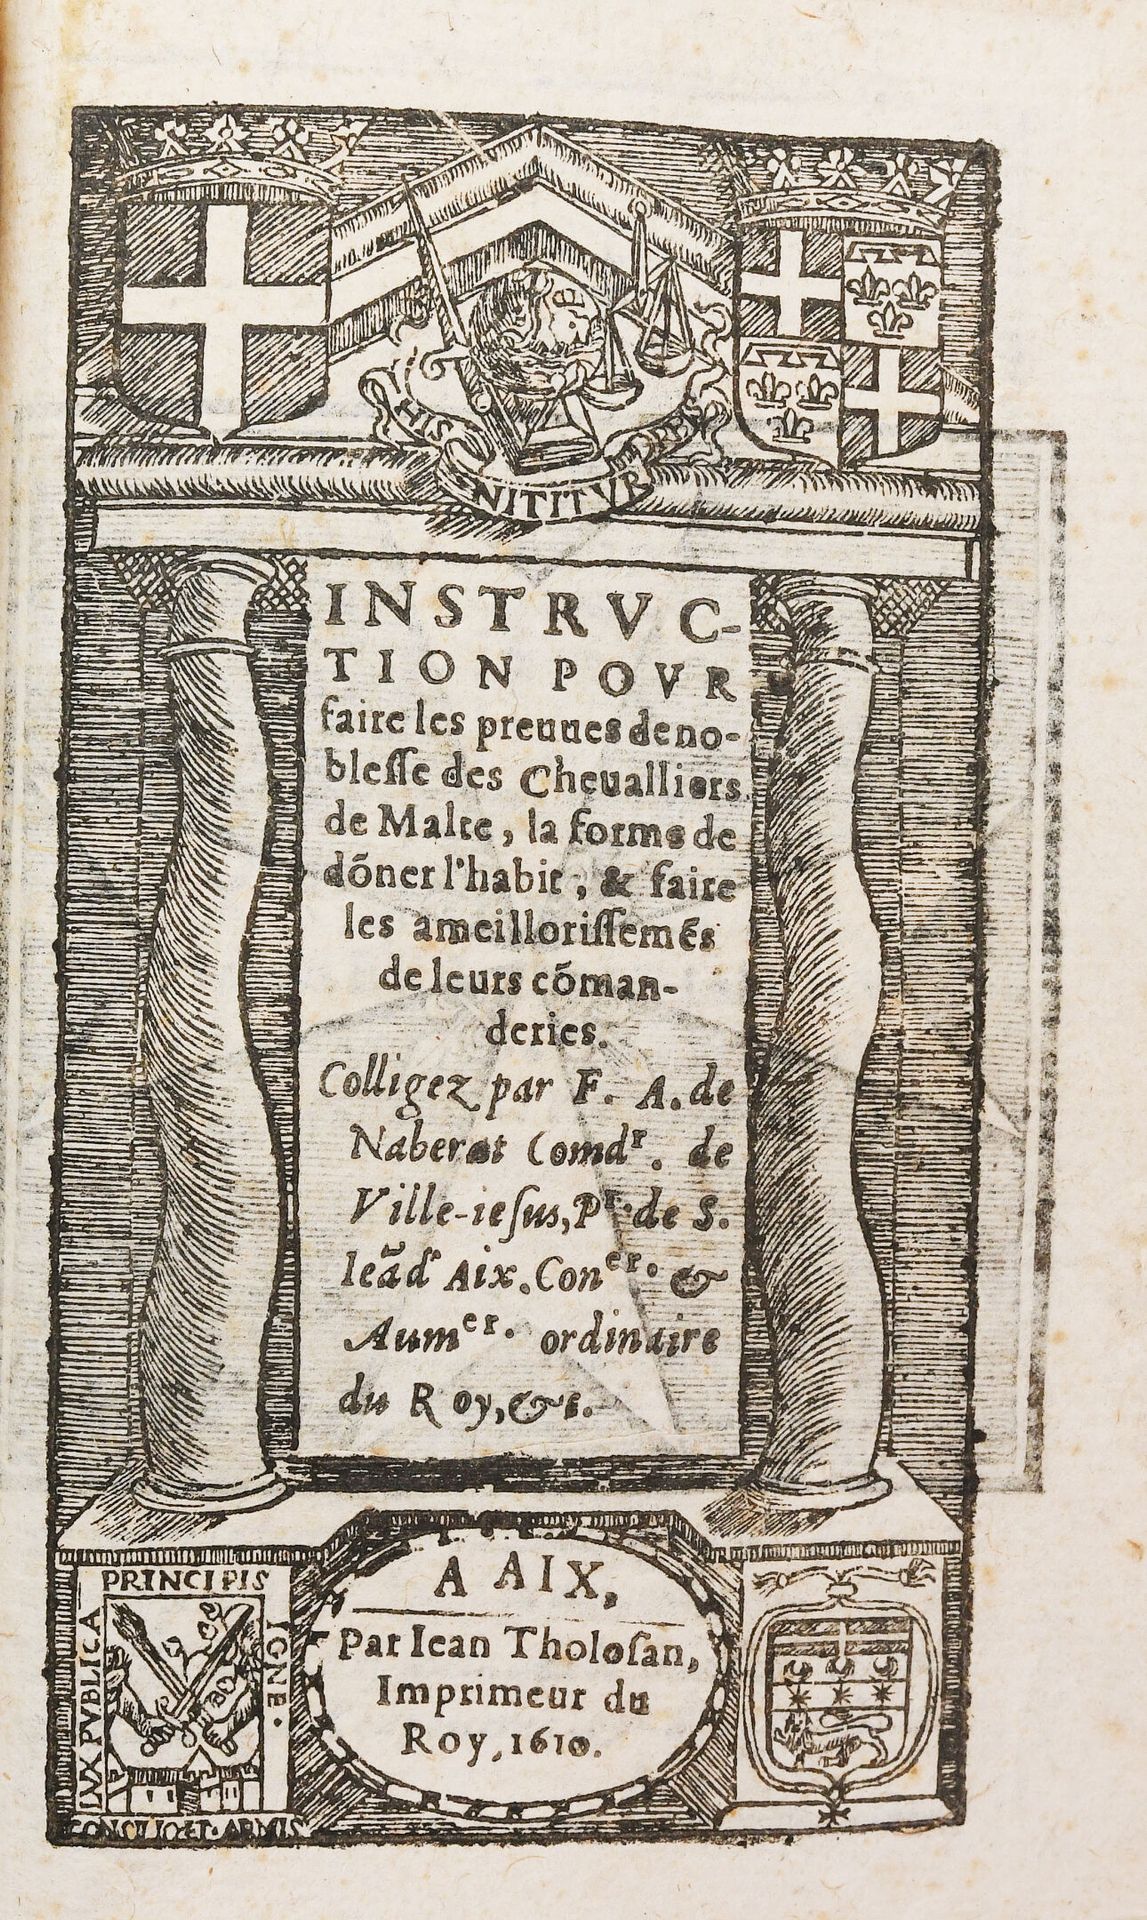 Null [马耳他]。NABERAT (Anne de).基督教和政治广告--马耳他骑士团的贵族证明指示，给予习惯的形式，等等。
艾克斯，让-托洛桑著，1610&hellip;